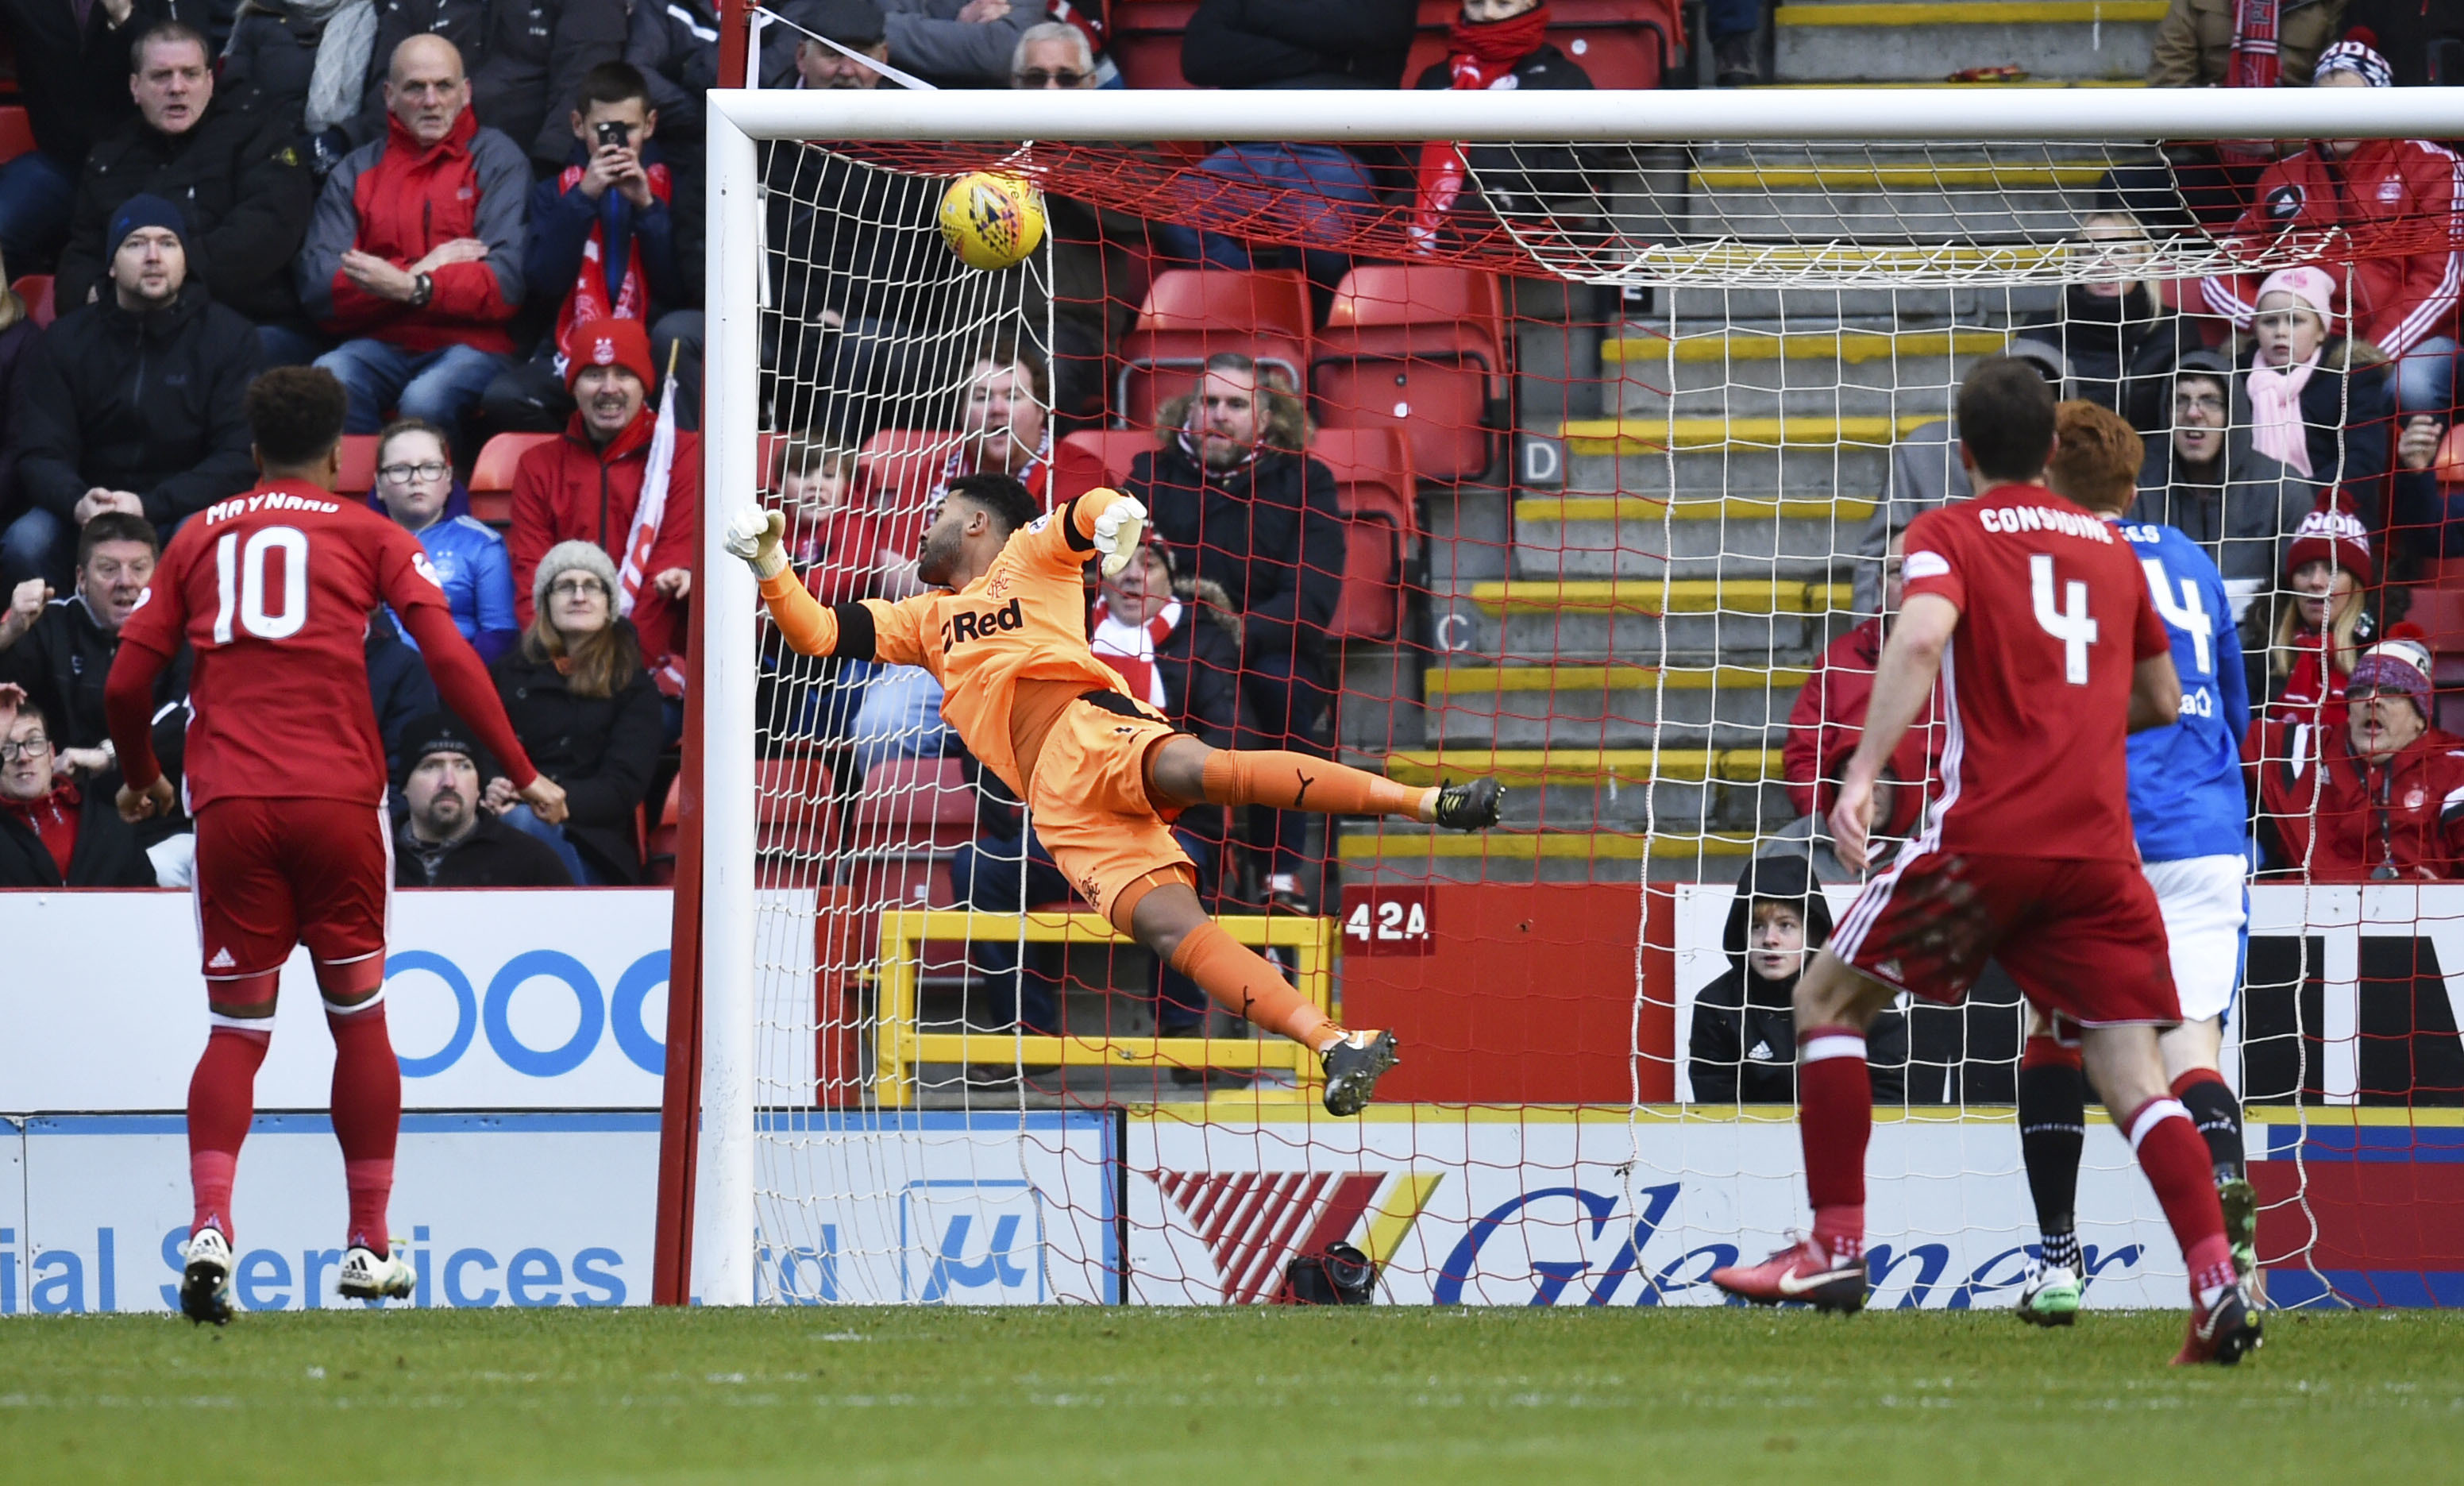 Aberdeen's Frank Ross scores to make it 2-1.